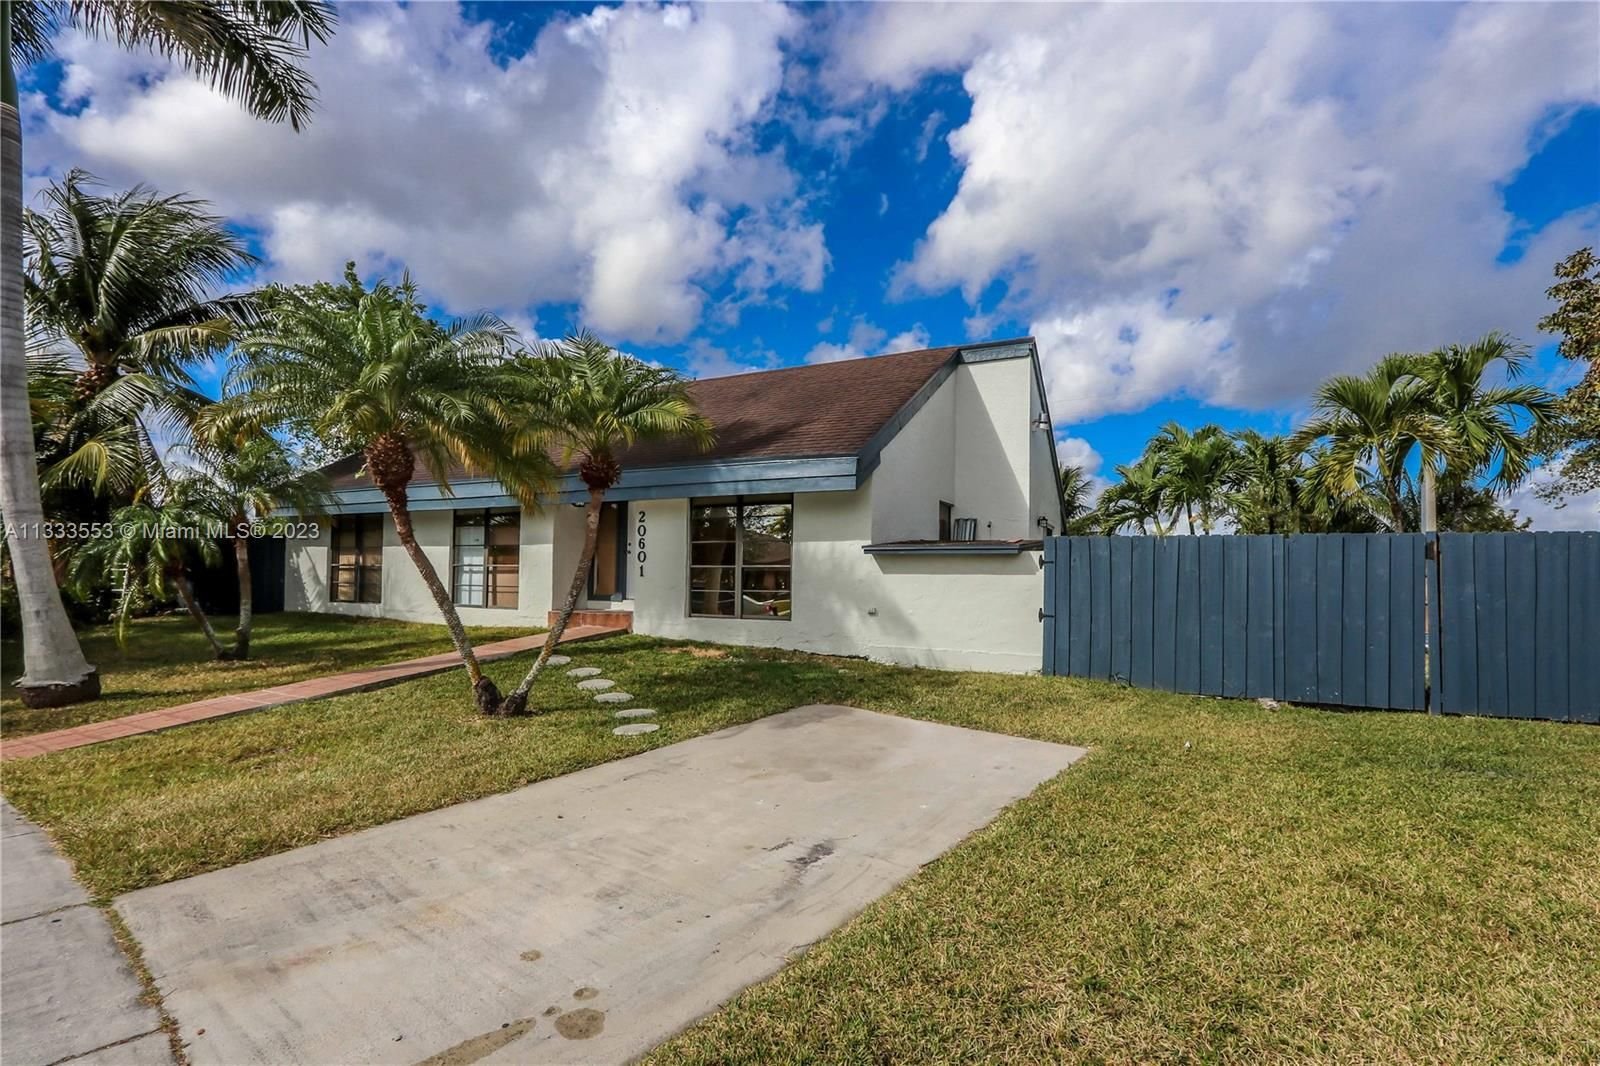 Real estate property located at 20601 120th Ct, Miami-Dade County, Miami, FL